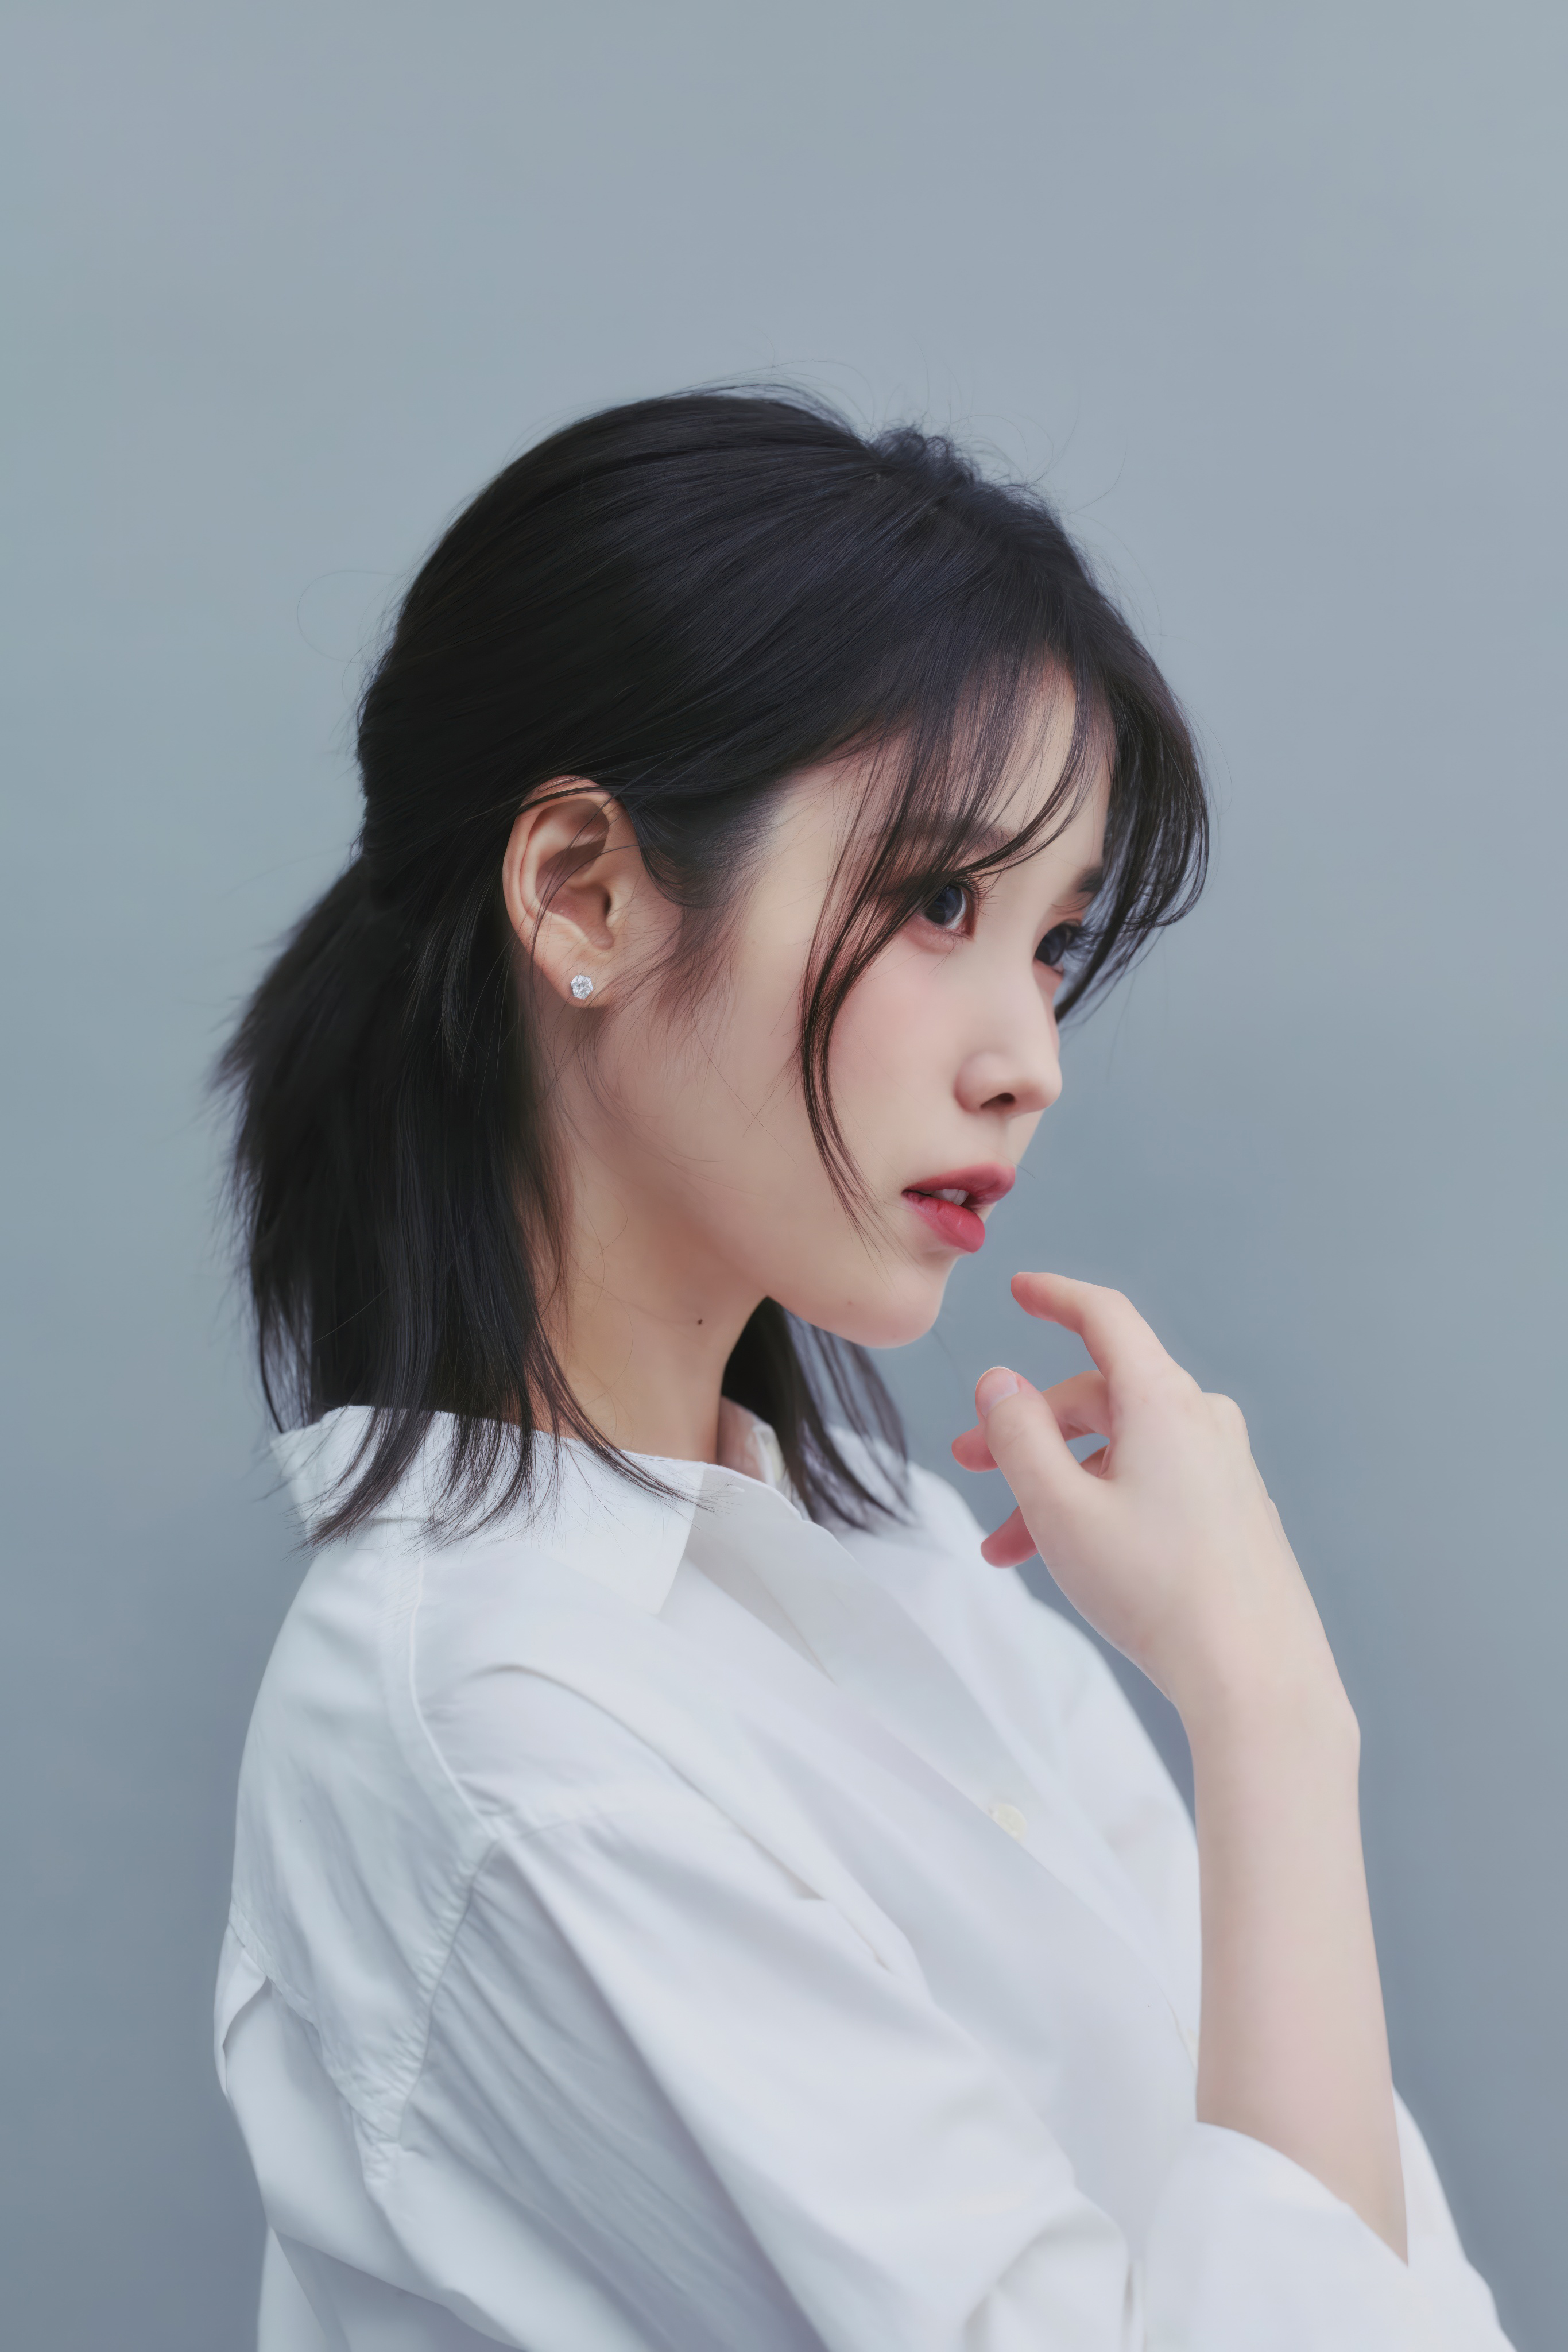 Lee Ji Eun Korean Women Asian Simple Background Portrait Portrait Display 2731x4096